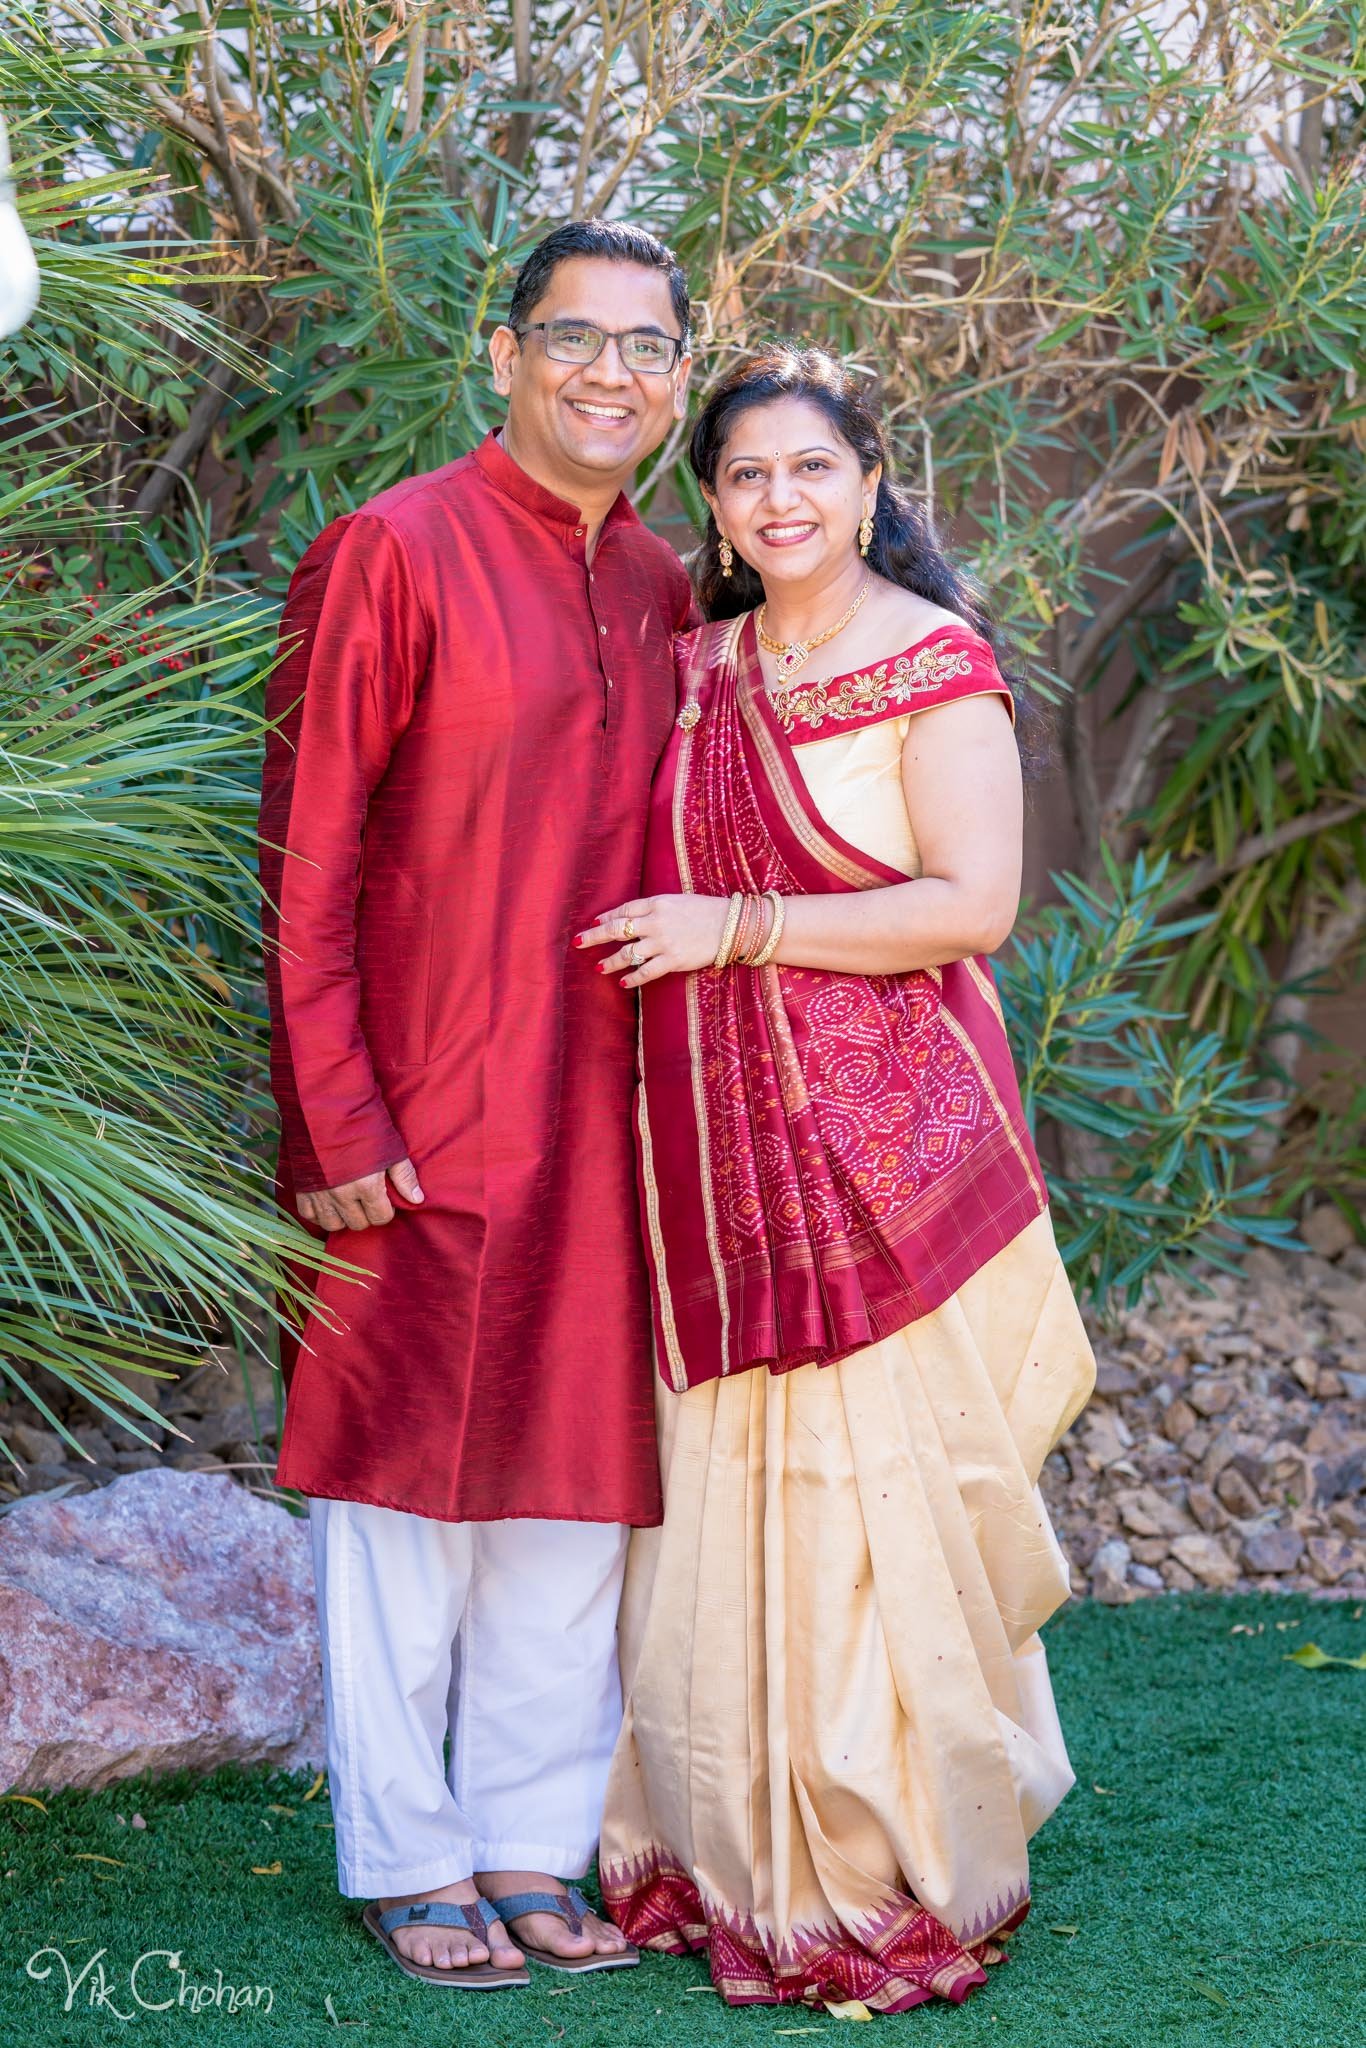 2022-02-03-Hely-&-Parth-Ganesh-Pooja-Indian-Wedding-Vik-Chohan-Photography-Photo-Booth-Social-Media-VCP-009.jpg